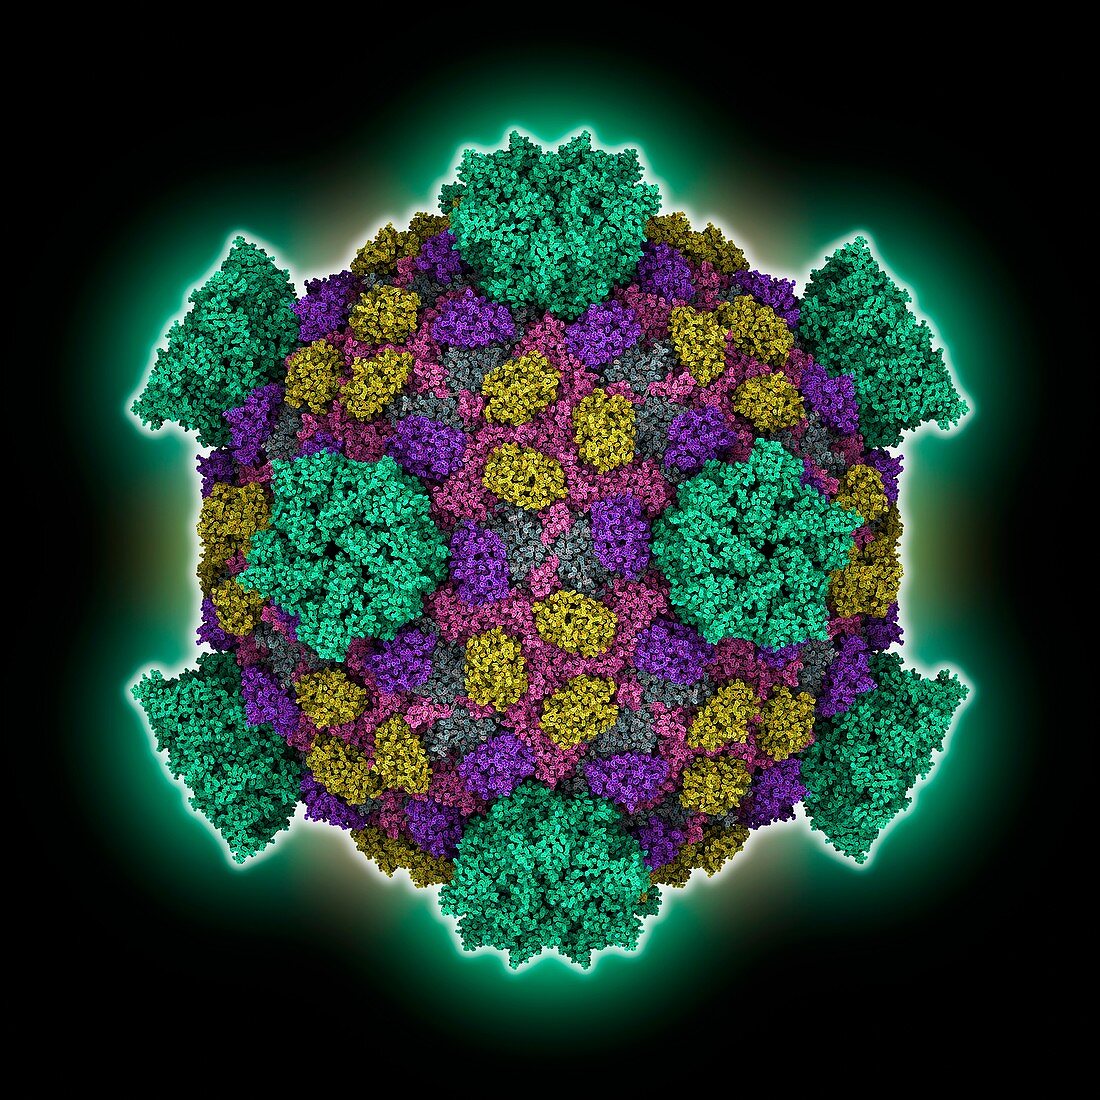 Reovirus capsid, molecular model